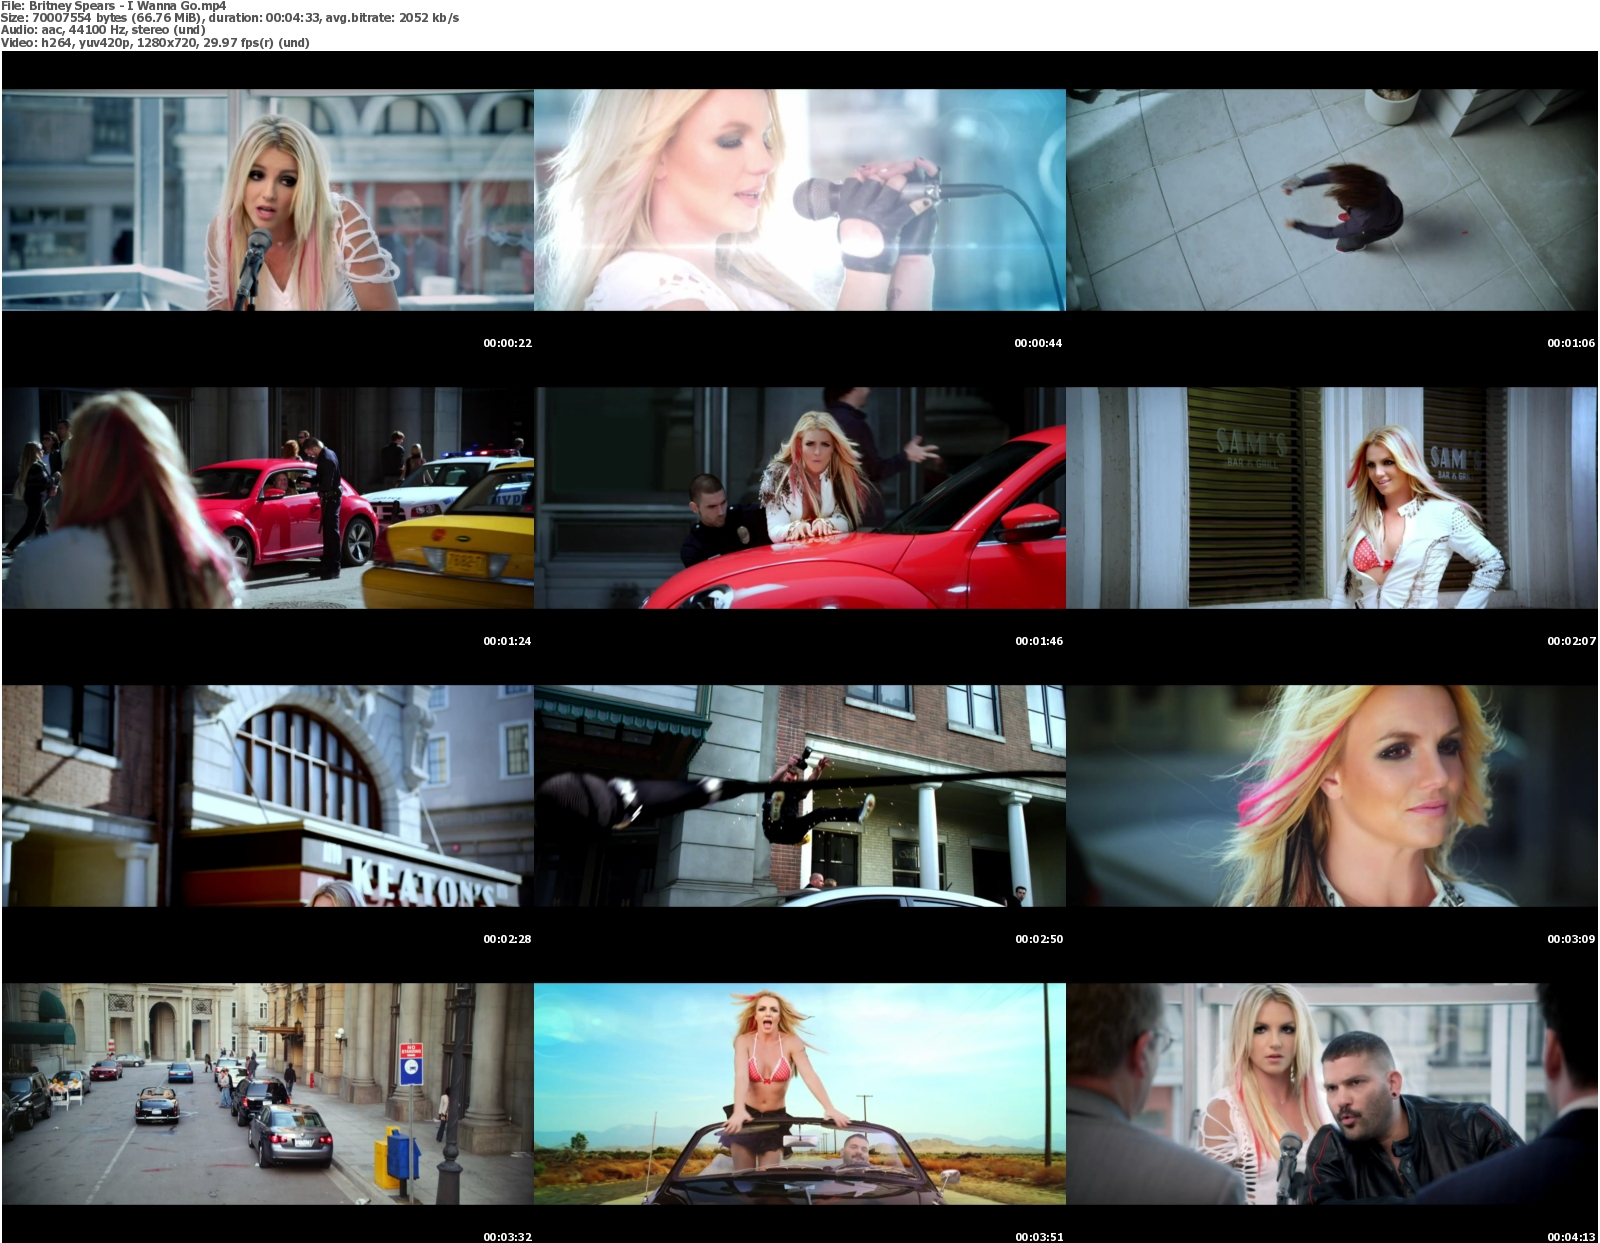 http://3.bp.blogspot.com/-Y05-VtE7gjw/T5zmTi9MIqI/AAAAAAAAGoM/XHTYjrLV0eo/s1600/Britney+Spears+-+I+Wanna+Go_s.jpg